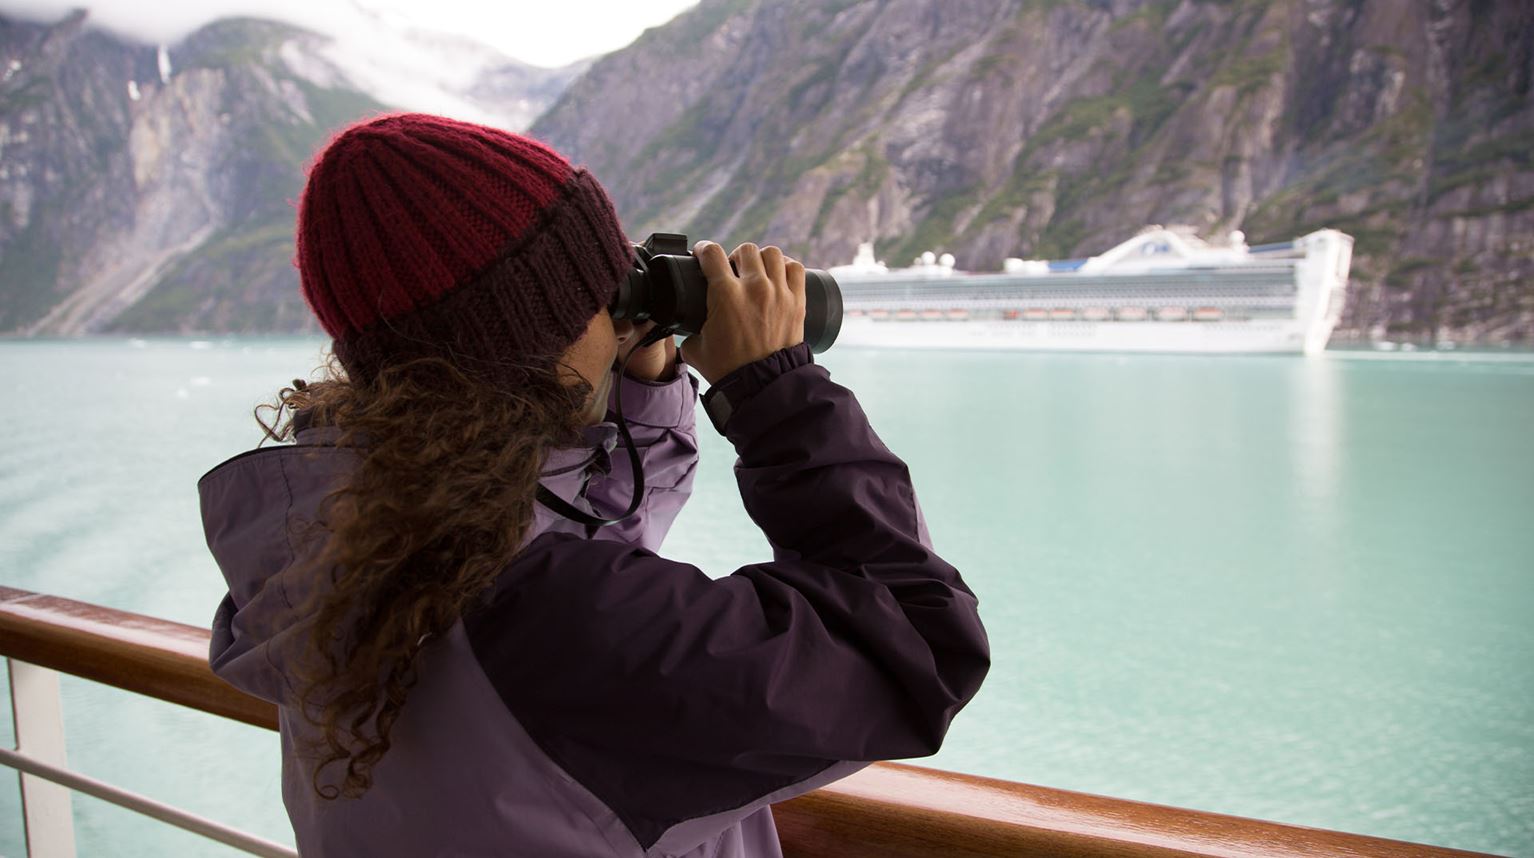 Woman on a ship overlooking the ocean using binoculars 